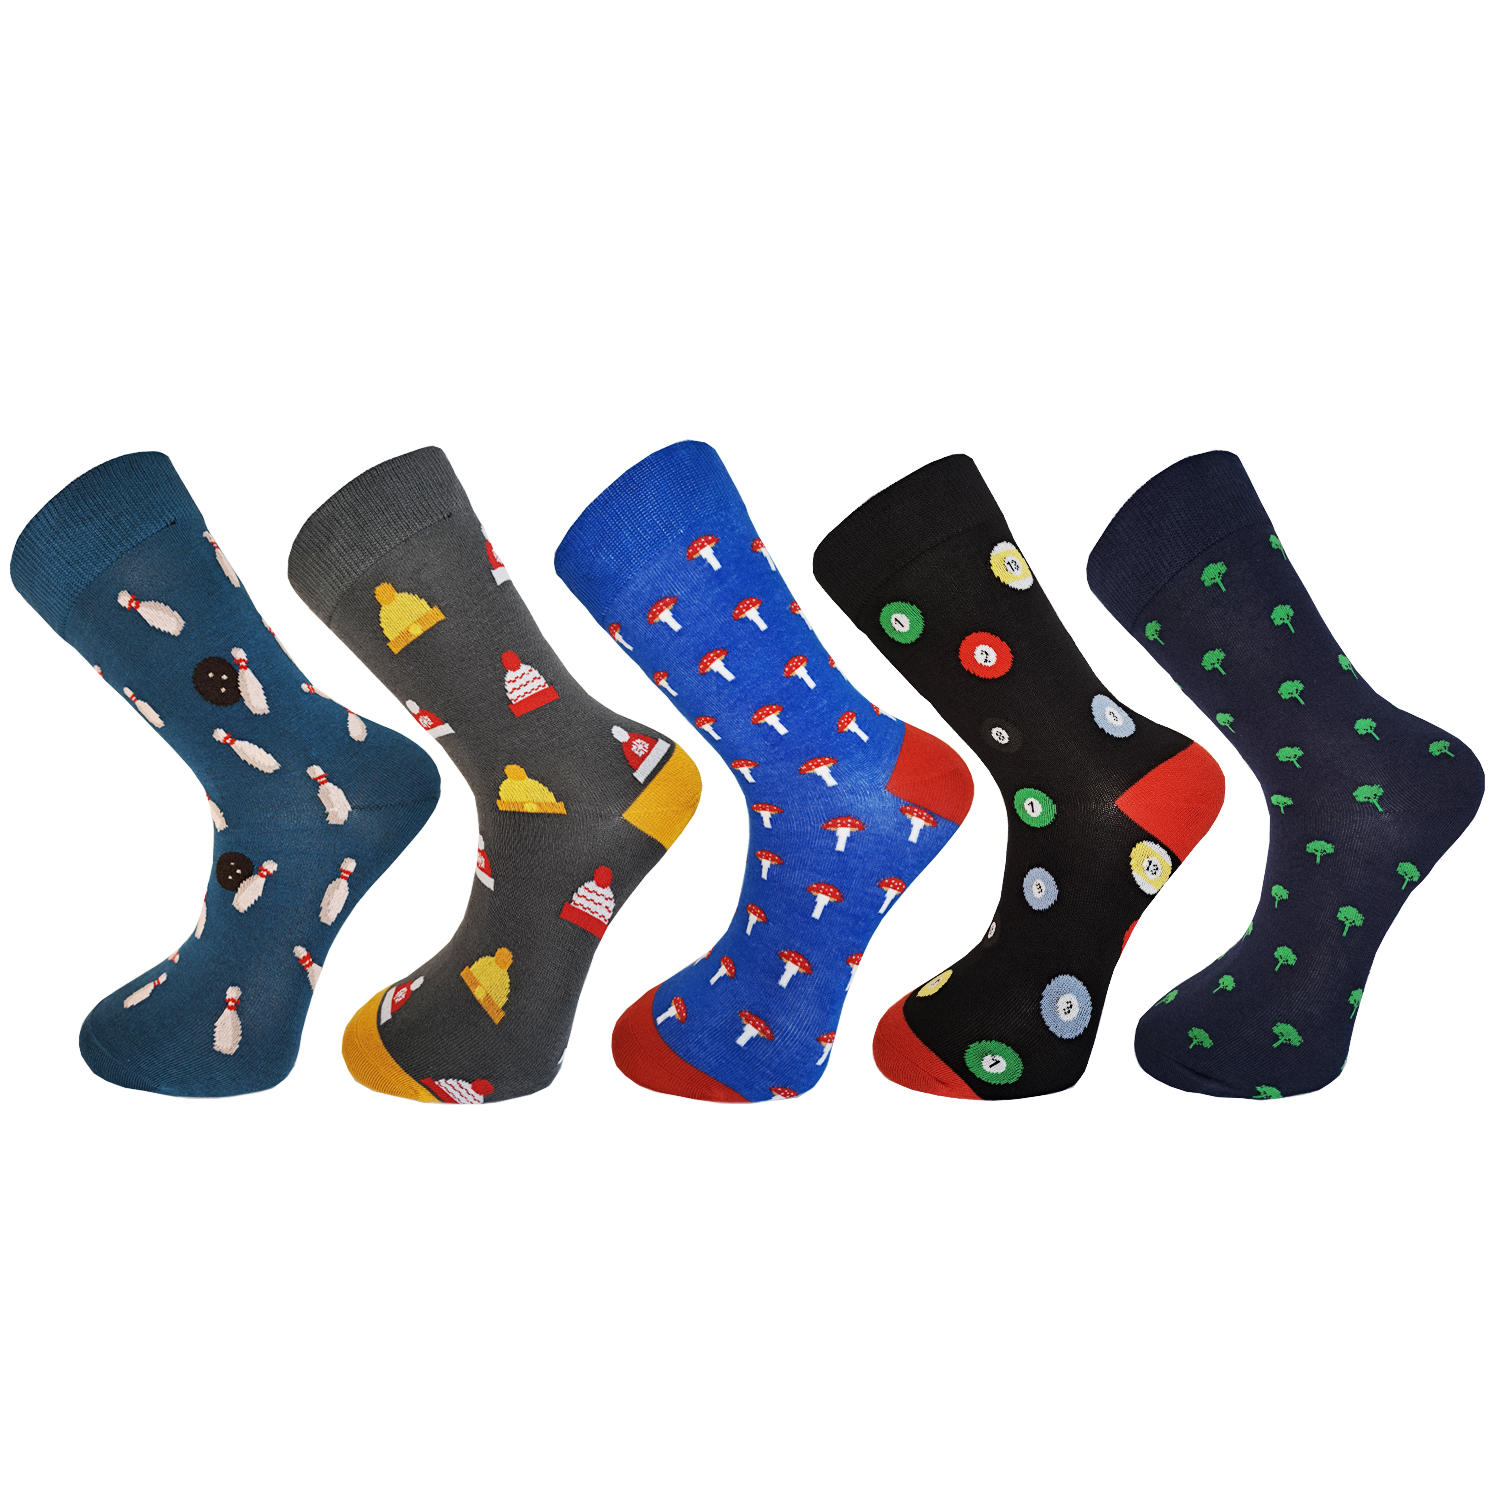 Pánské ponožky Aura.Via - FC6597, mix barev Barva: Mix barev, Velikost: 43-46